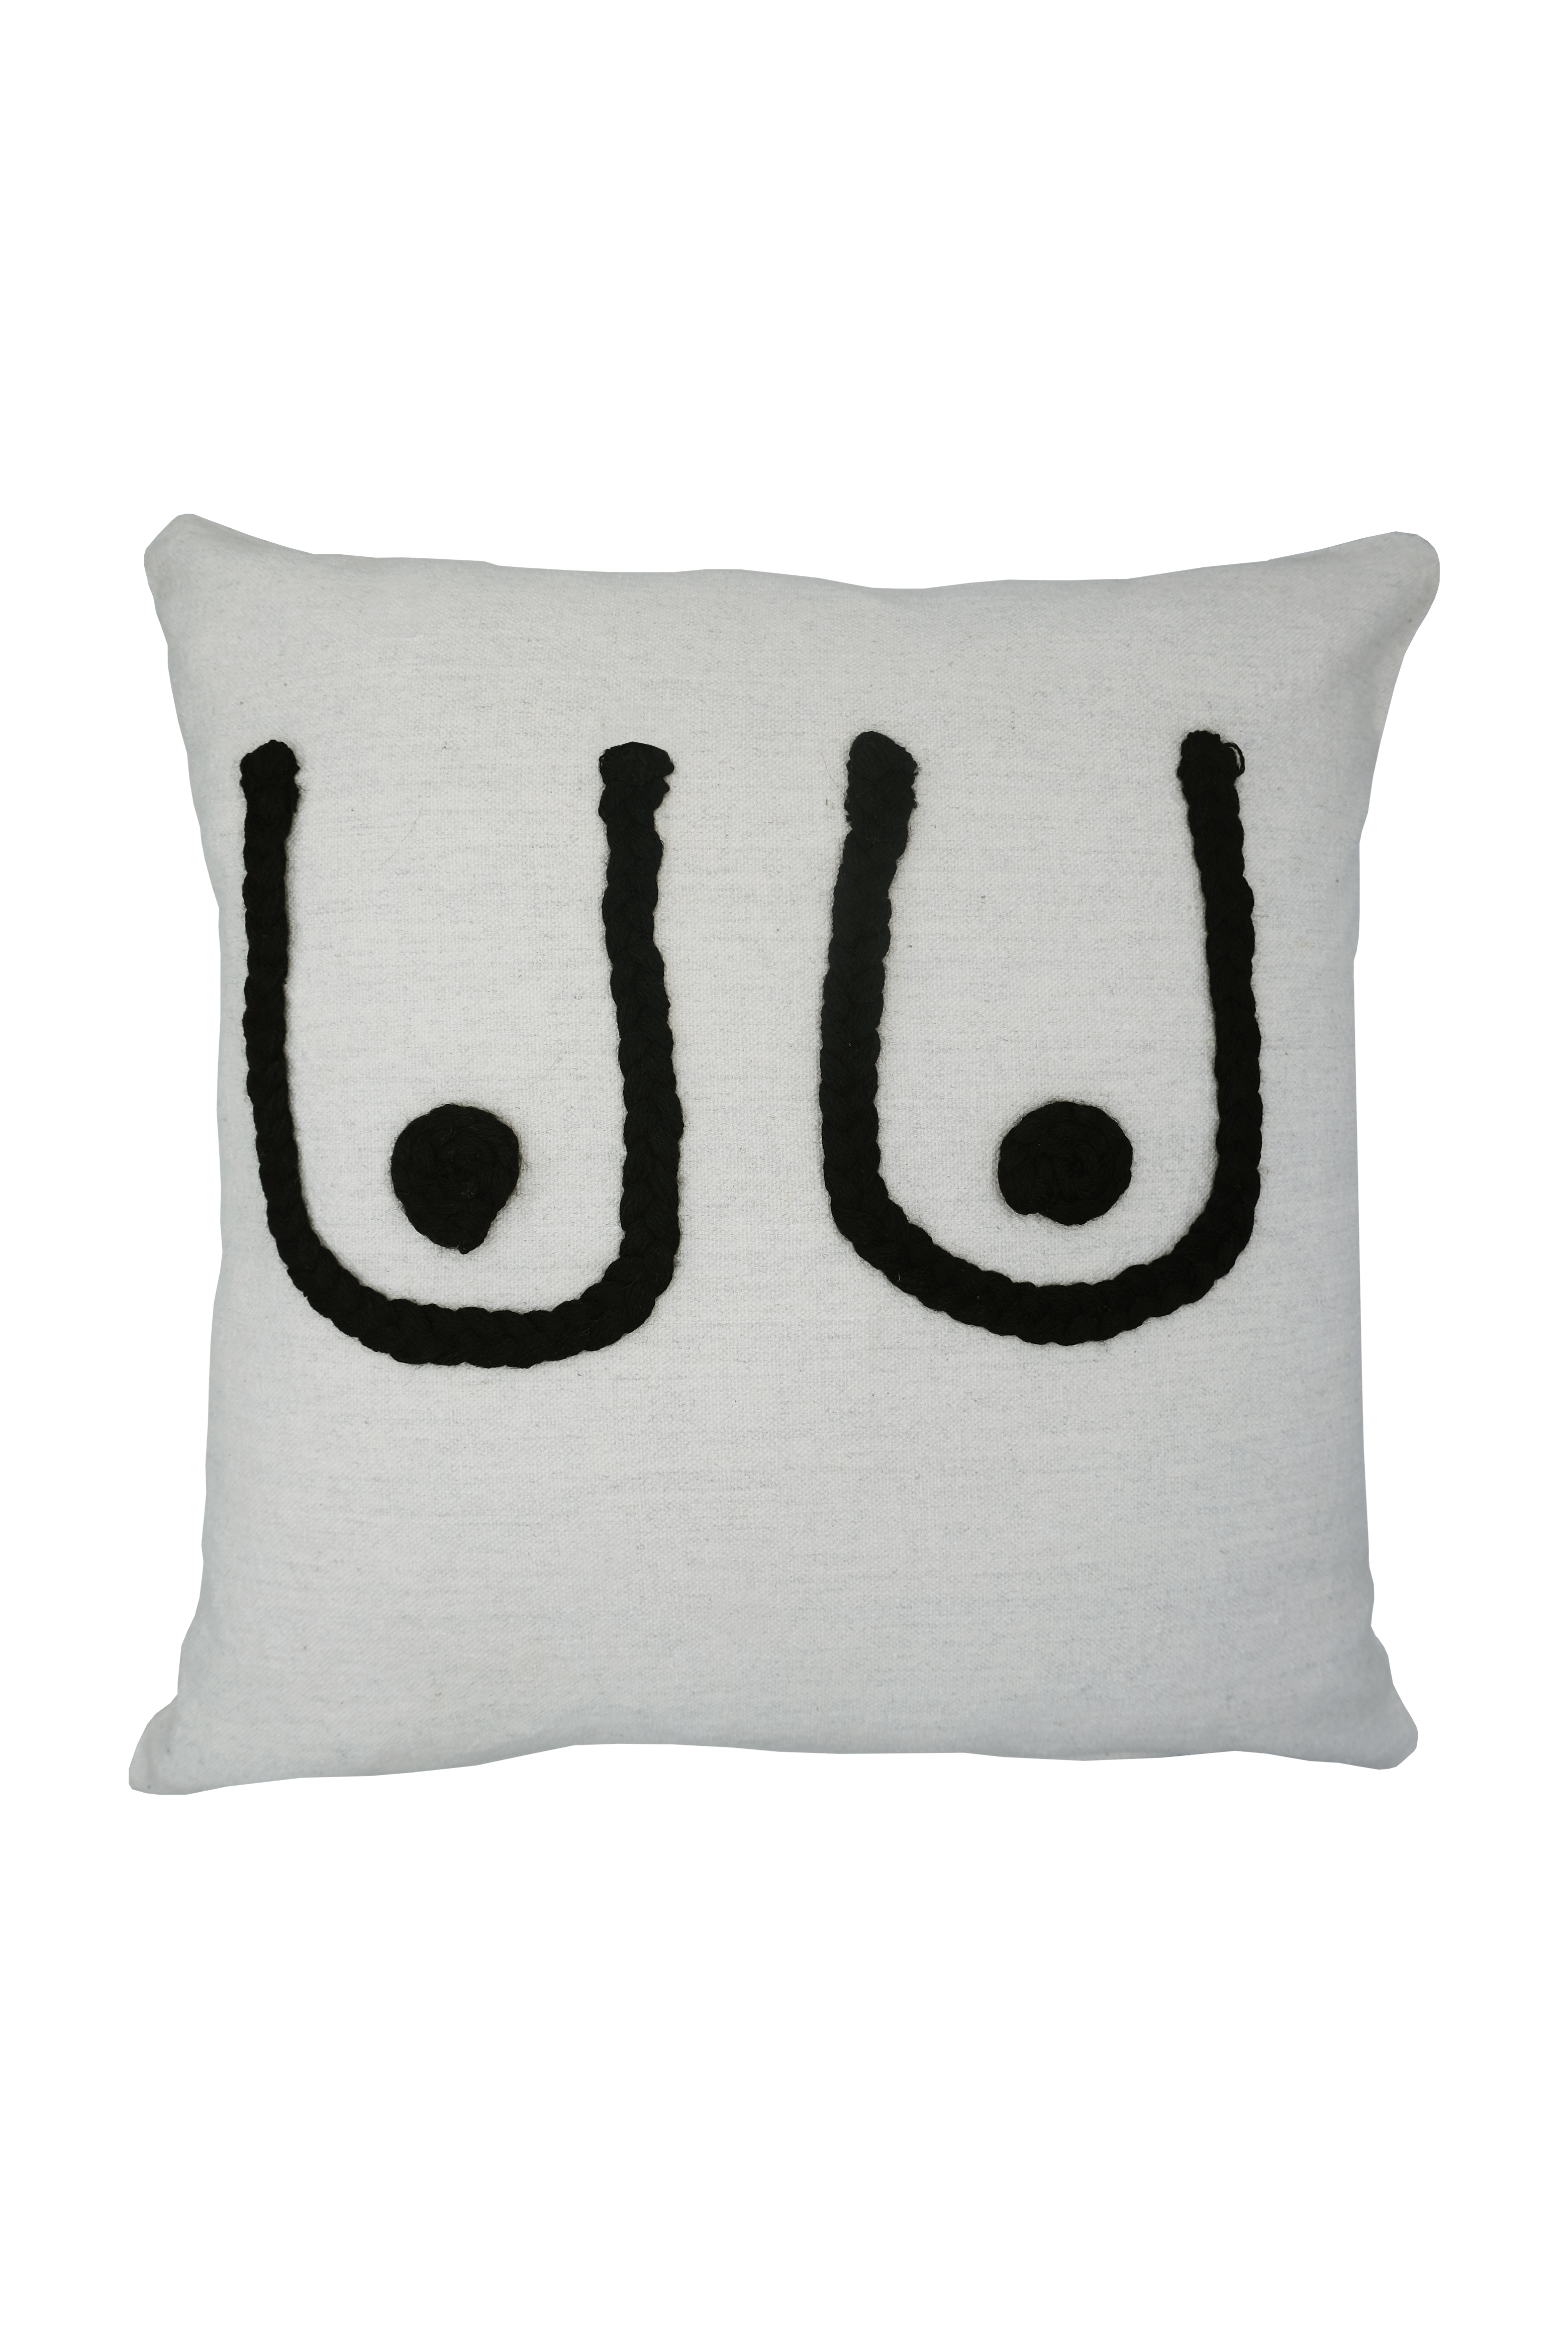 Black Boob Cushion